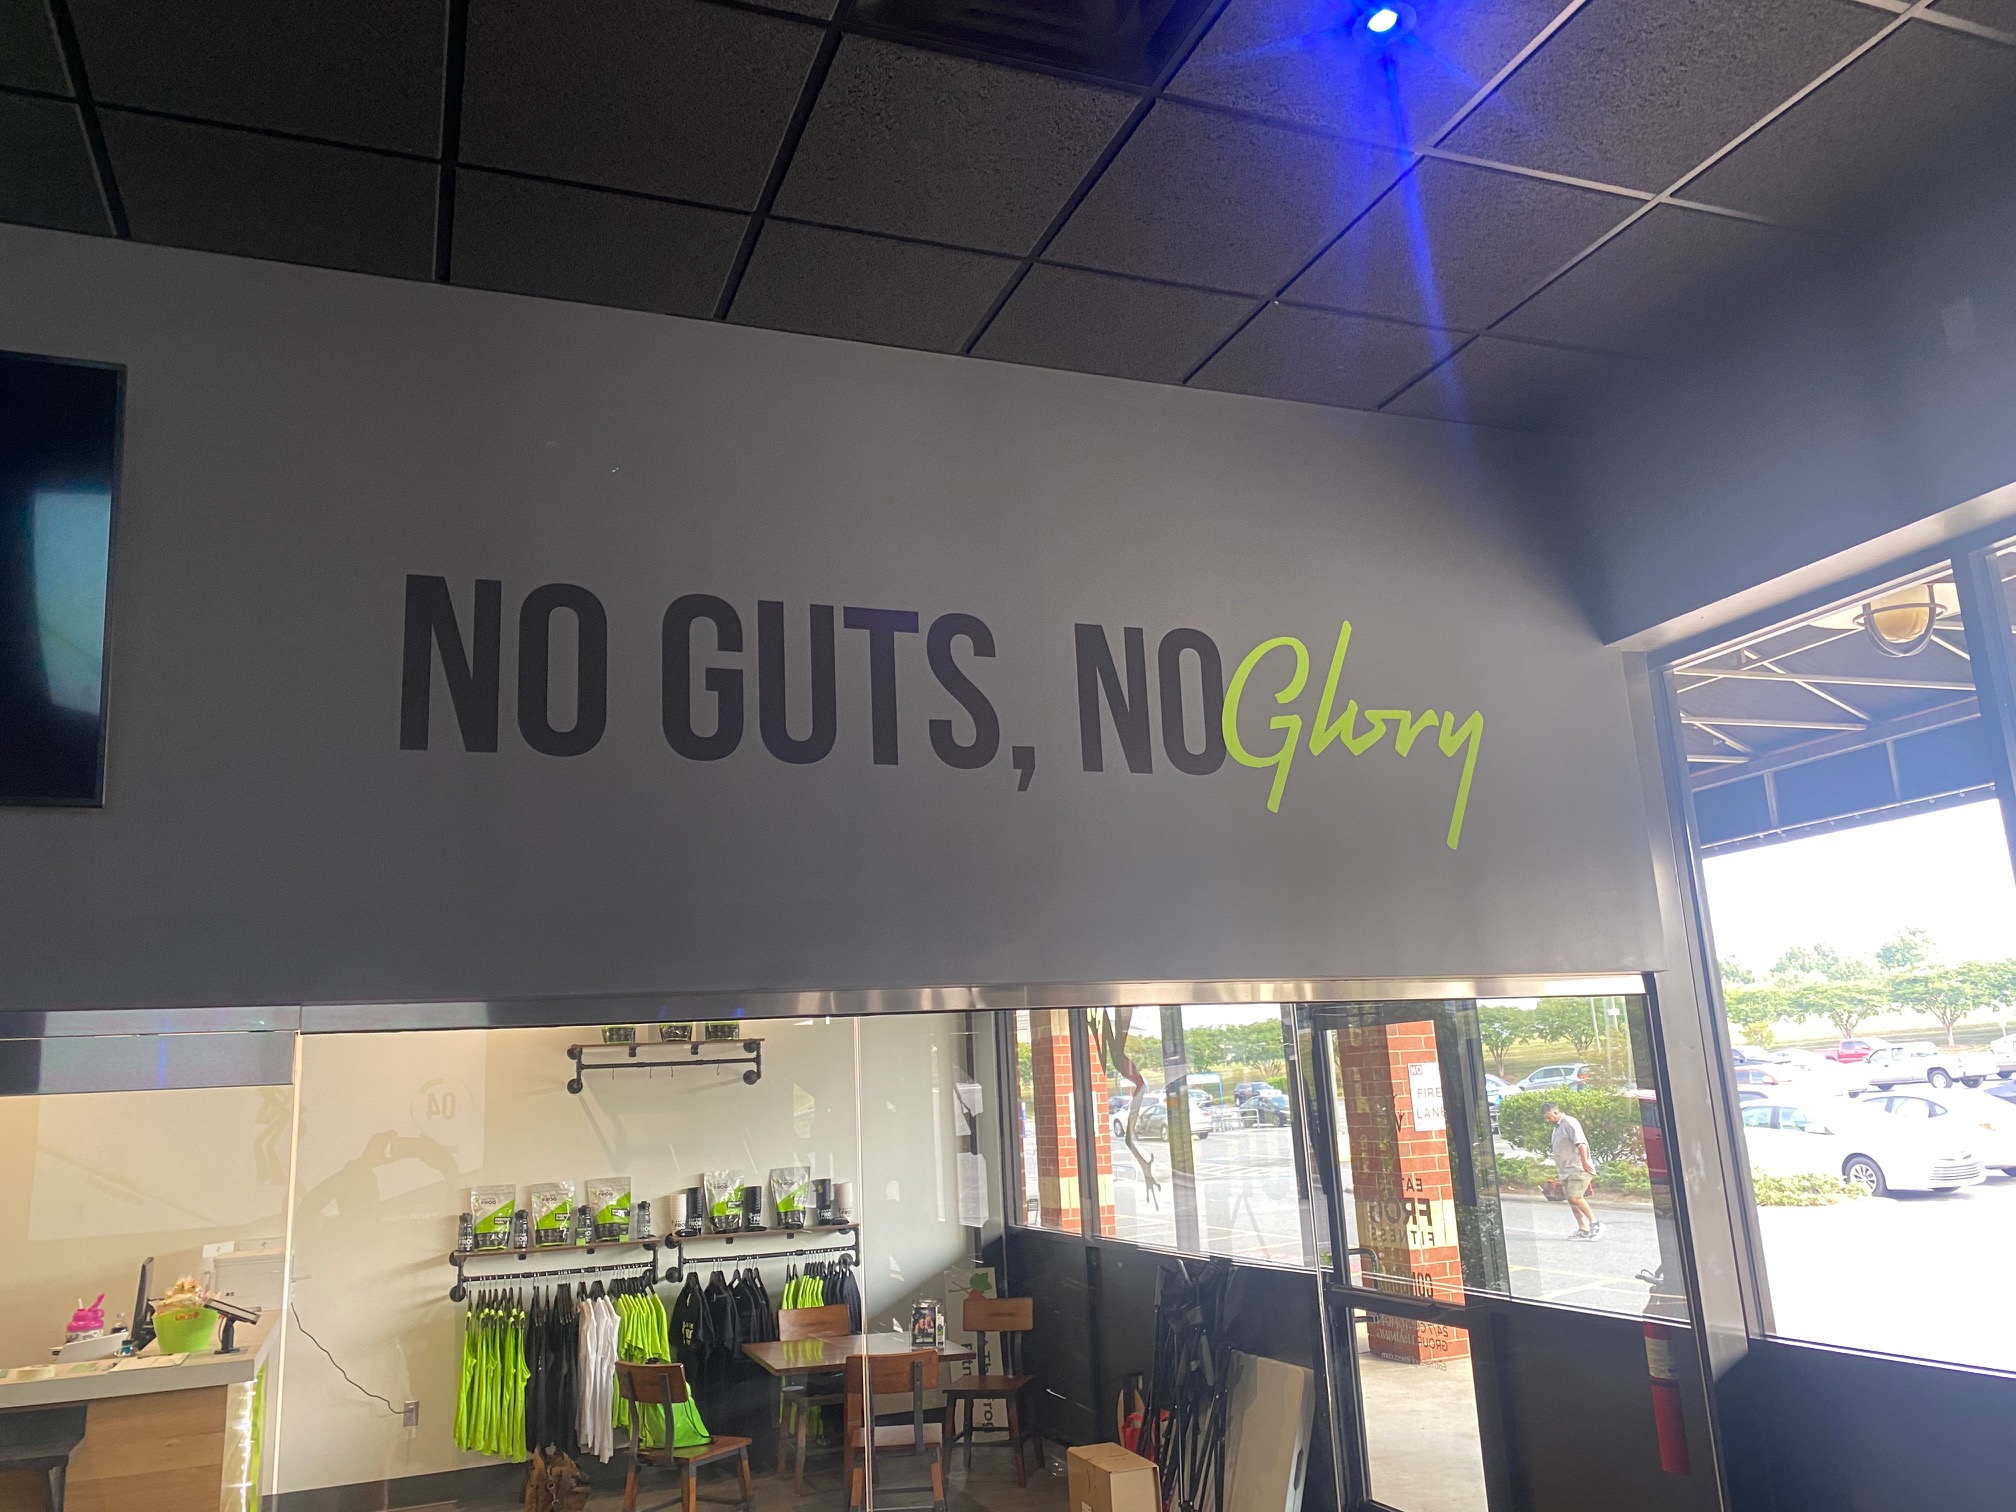 Mural at Eat the Frog Fitness: No guts, no glory